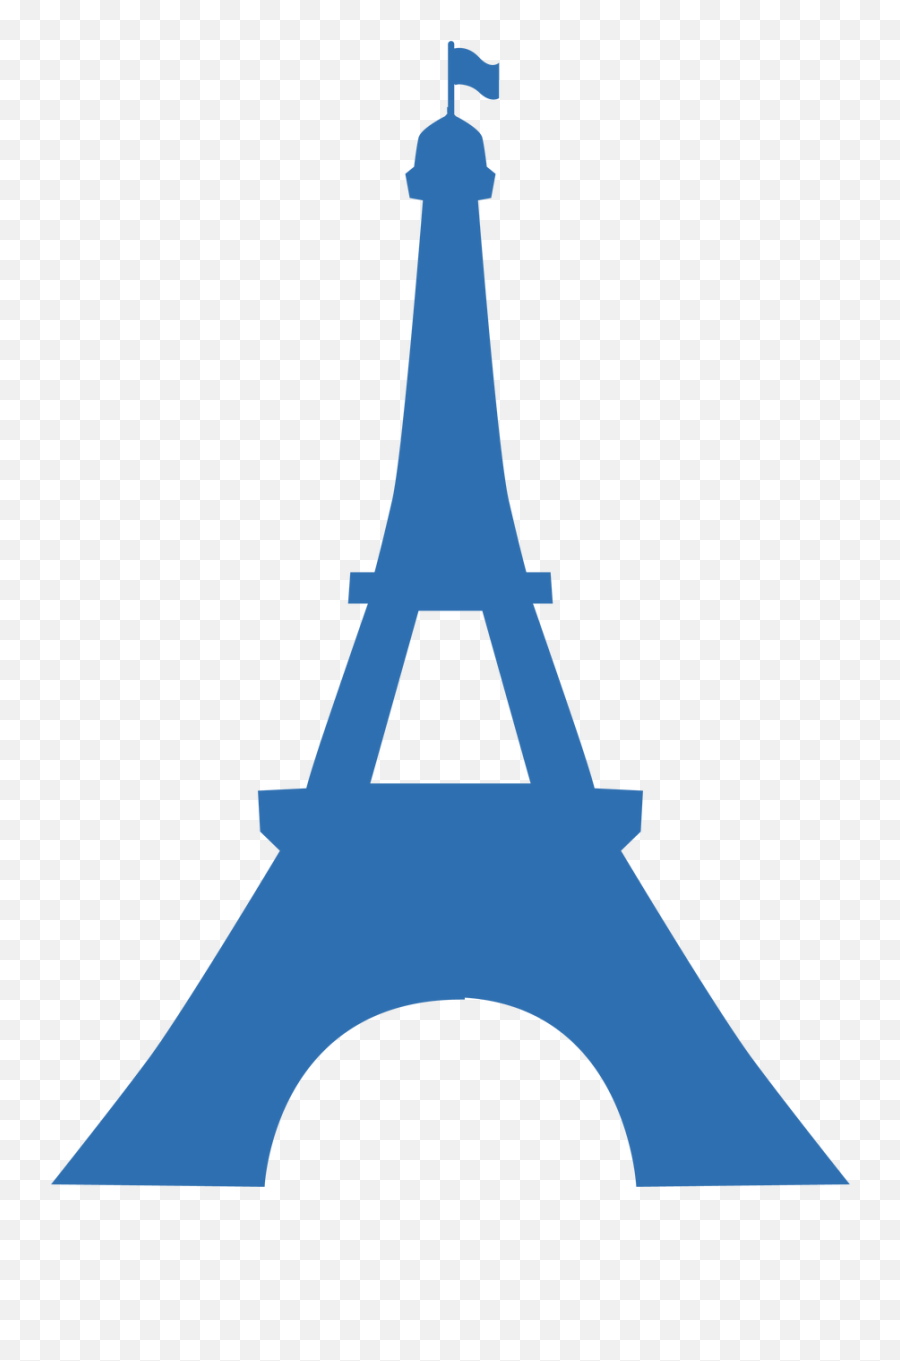 Eiffel Tower Transparent Cartoon - Jingfm Eiffel Tower Chat Paper Cut Out Png,Eiffel Tower Transparent